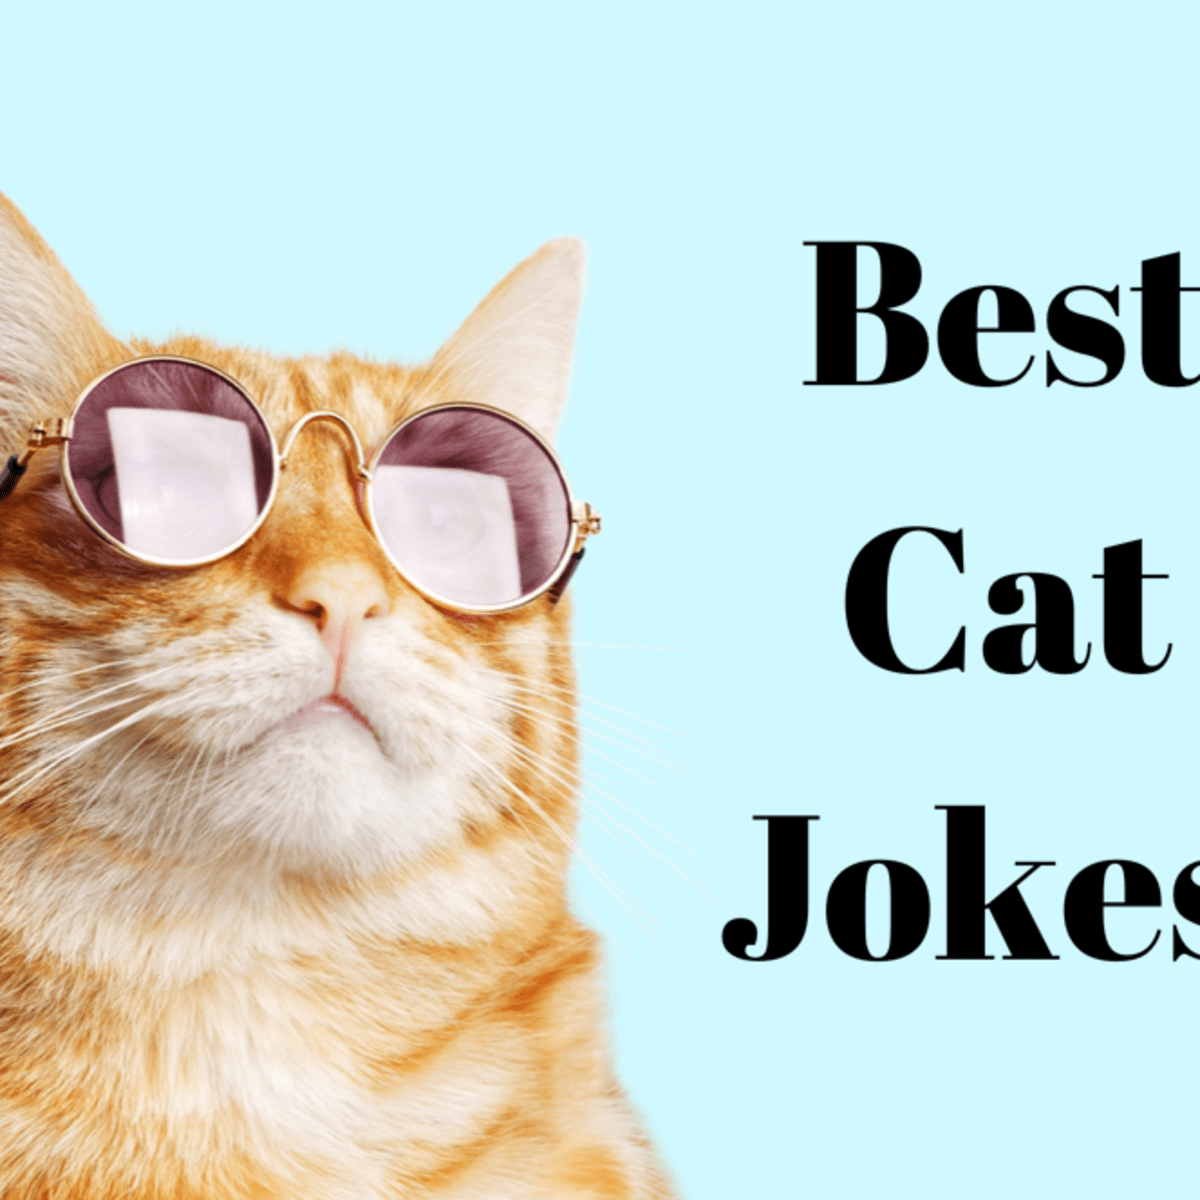 funny cat jokes